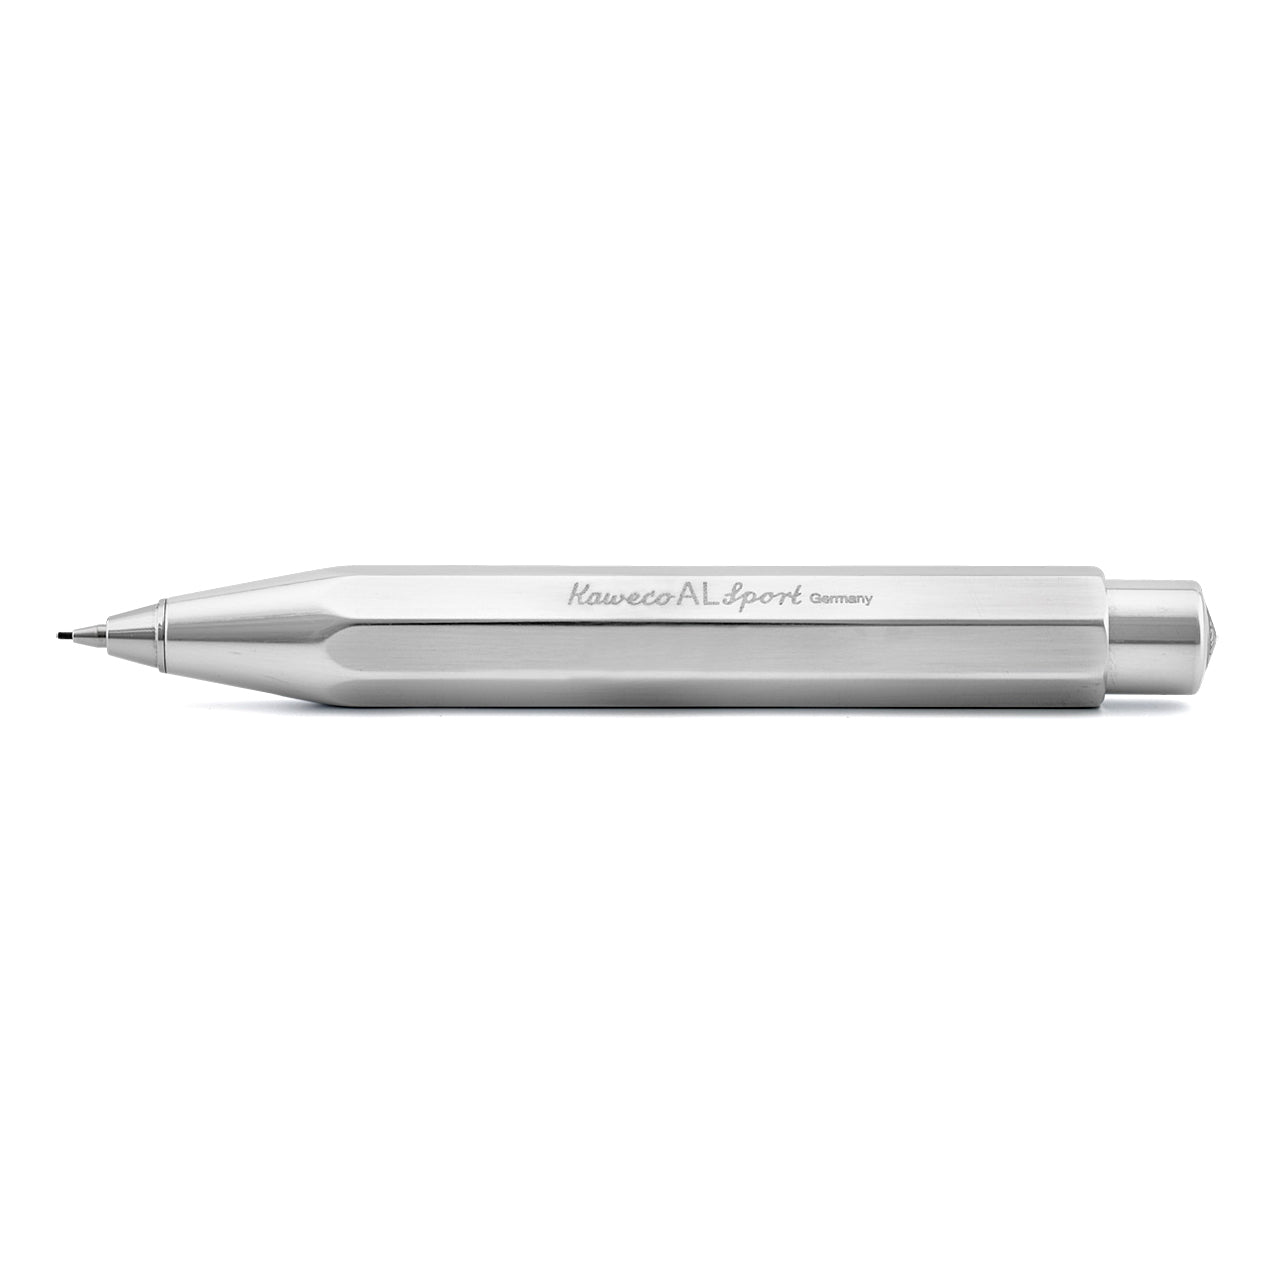 AL Sport Raw Aluminum High Gloss Polish 0.7 mm Lead Mechanical Push Pencil